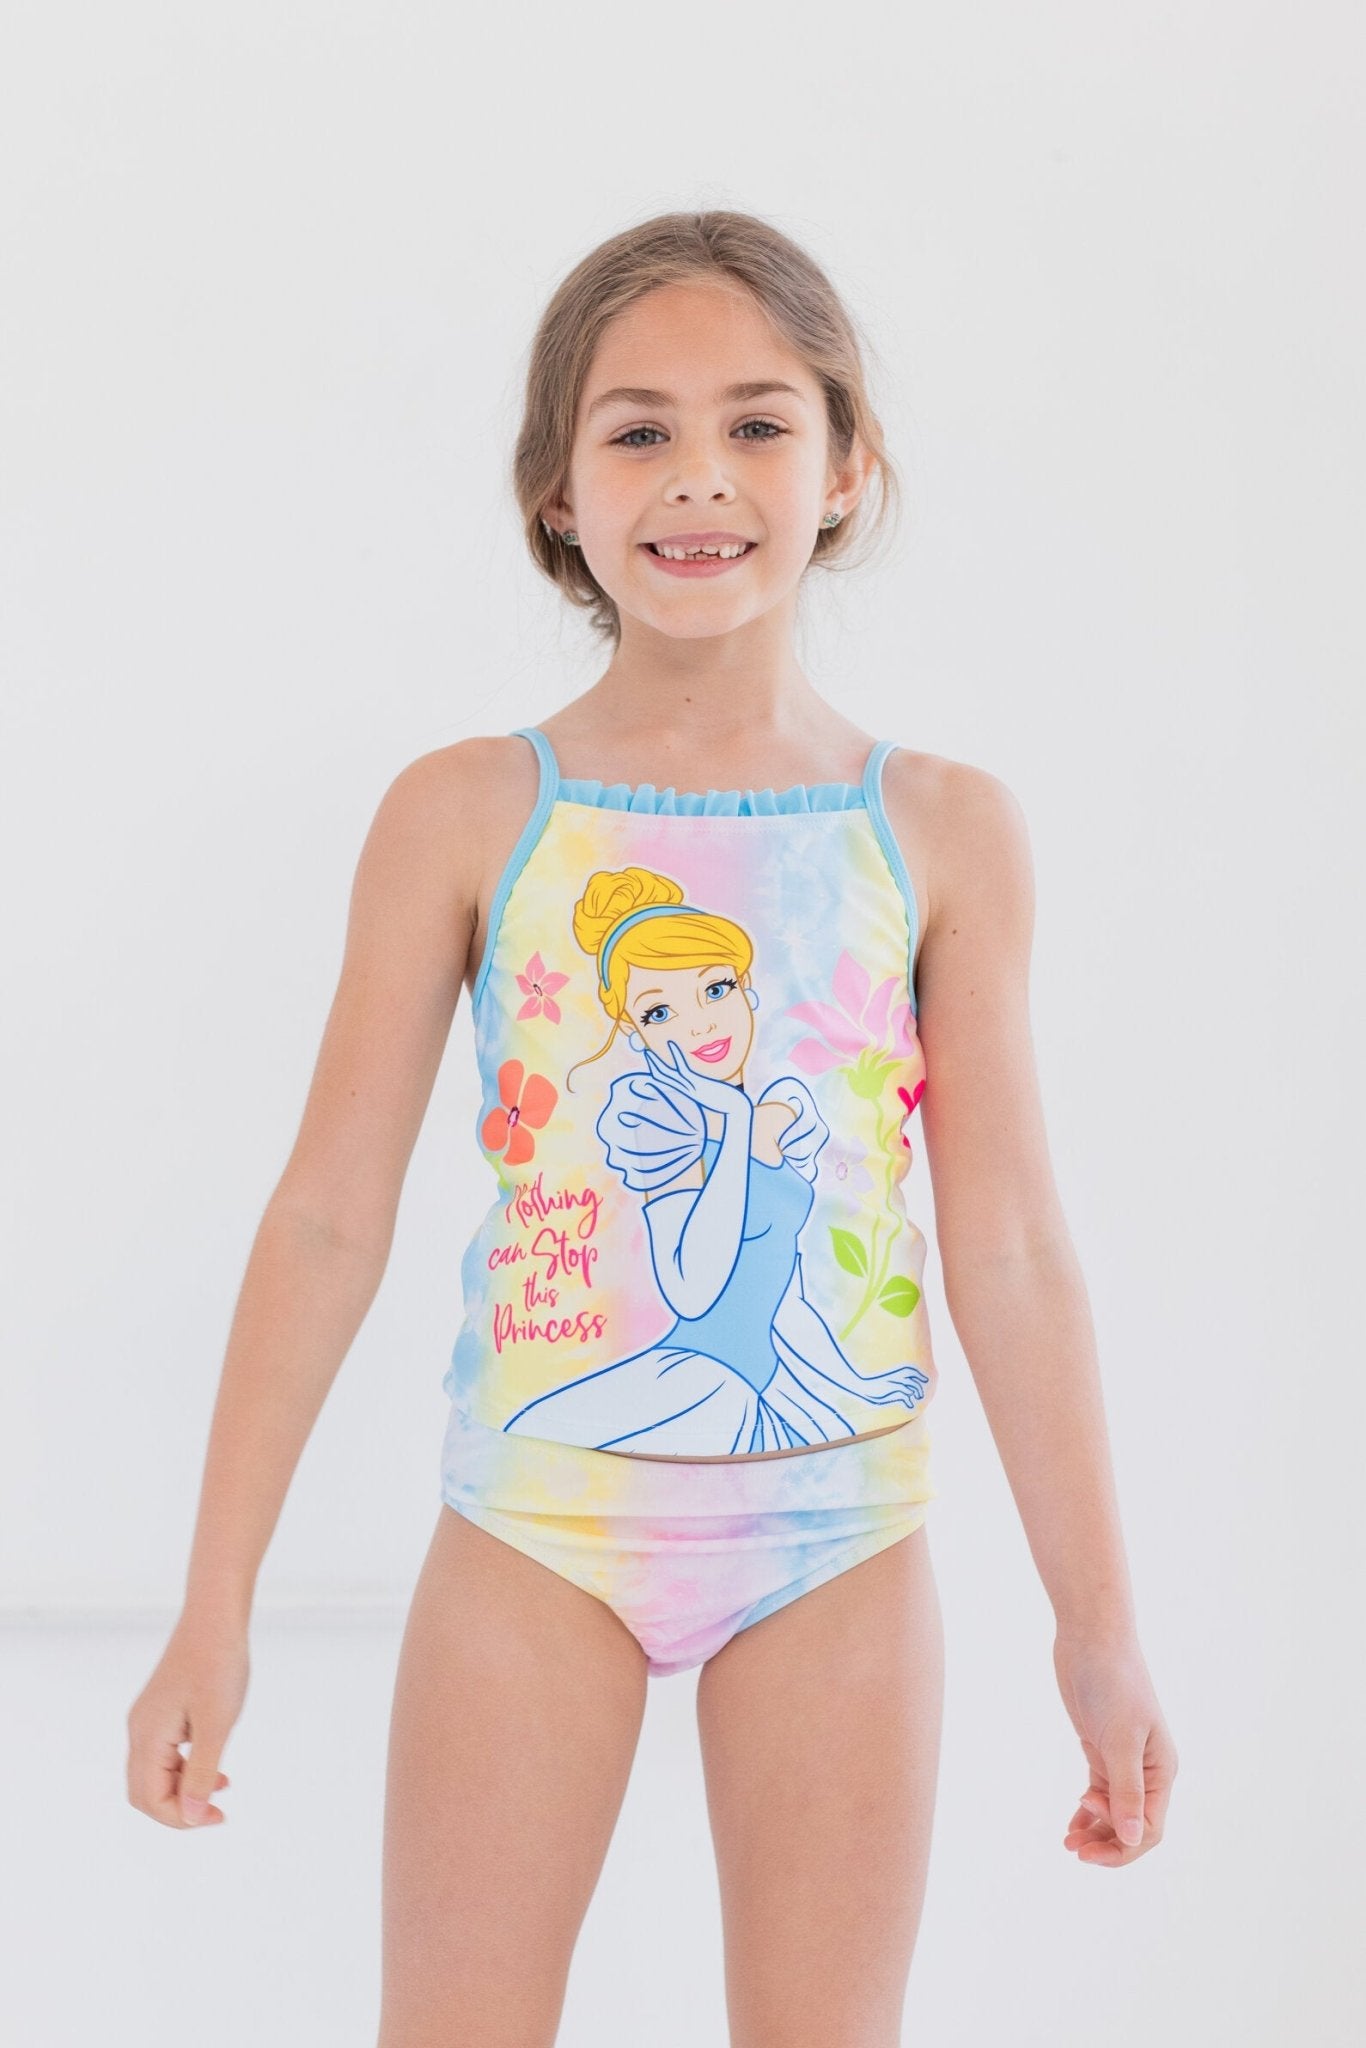 Disney Princess Tankini Tops and Bikini Bottom - imagikids